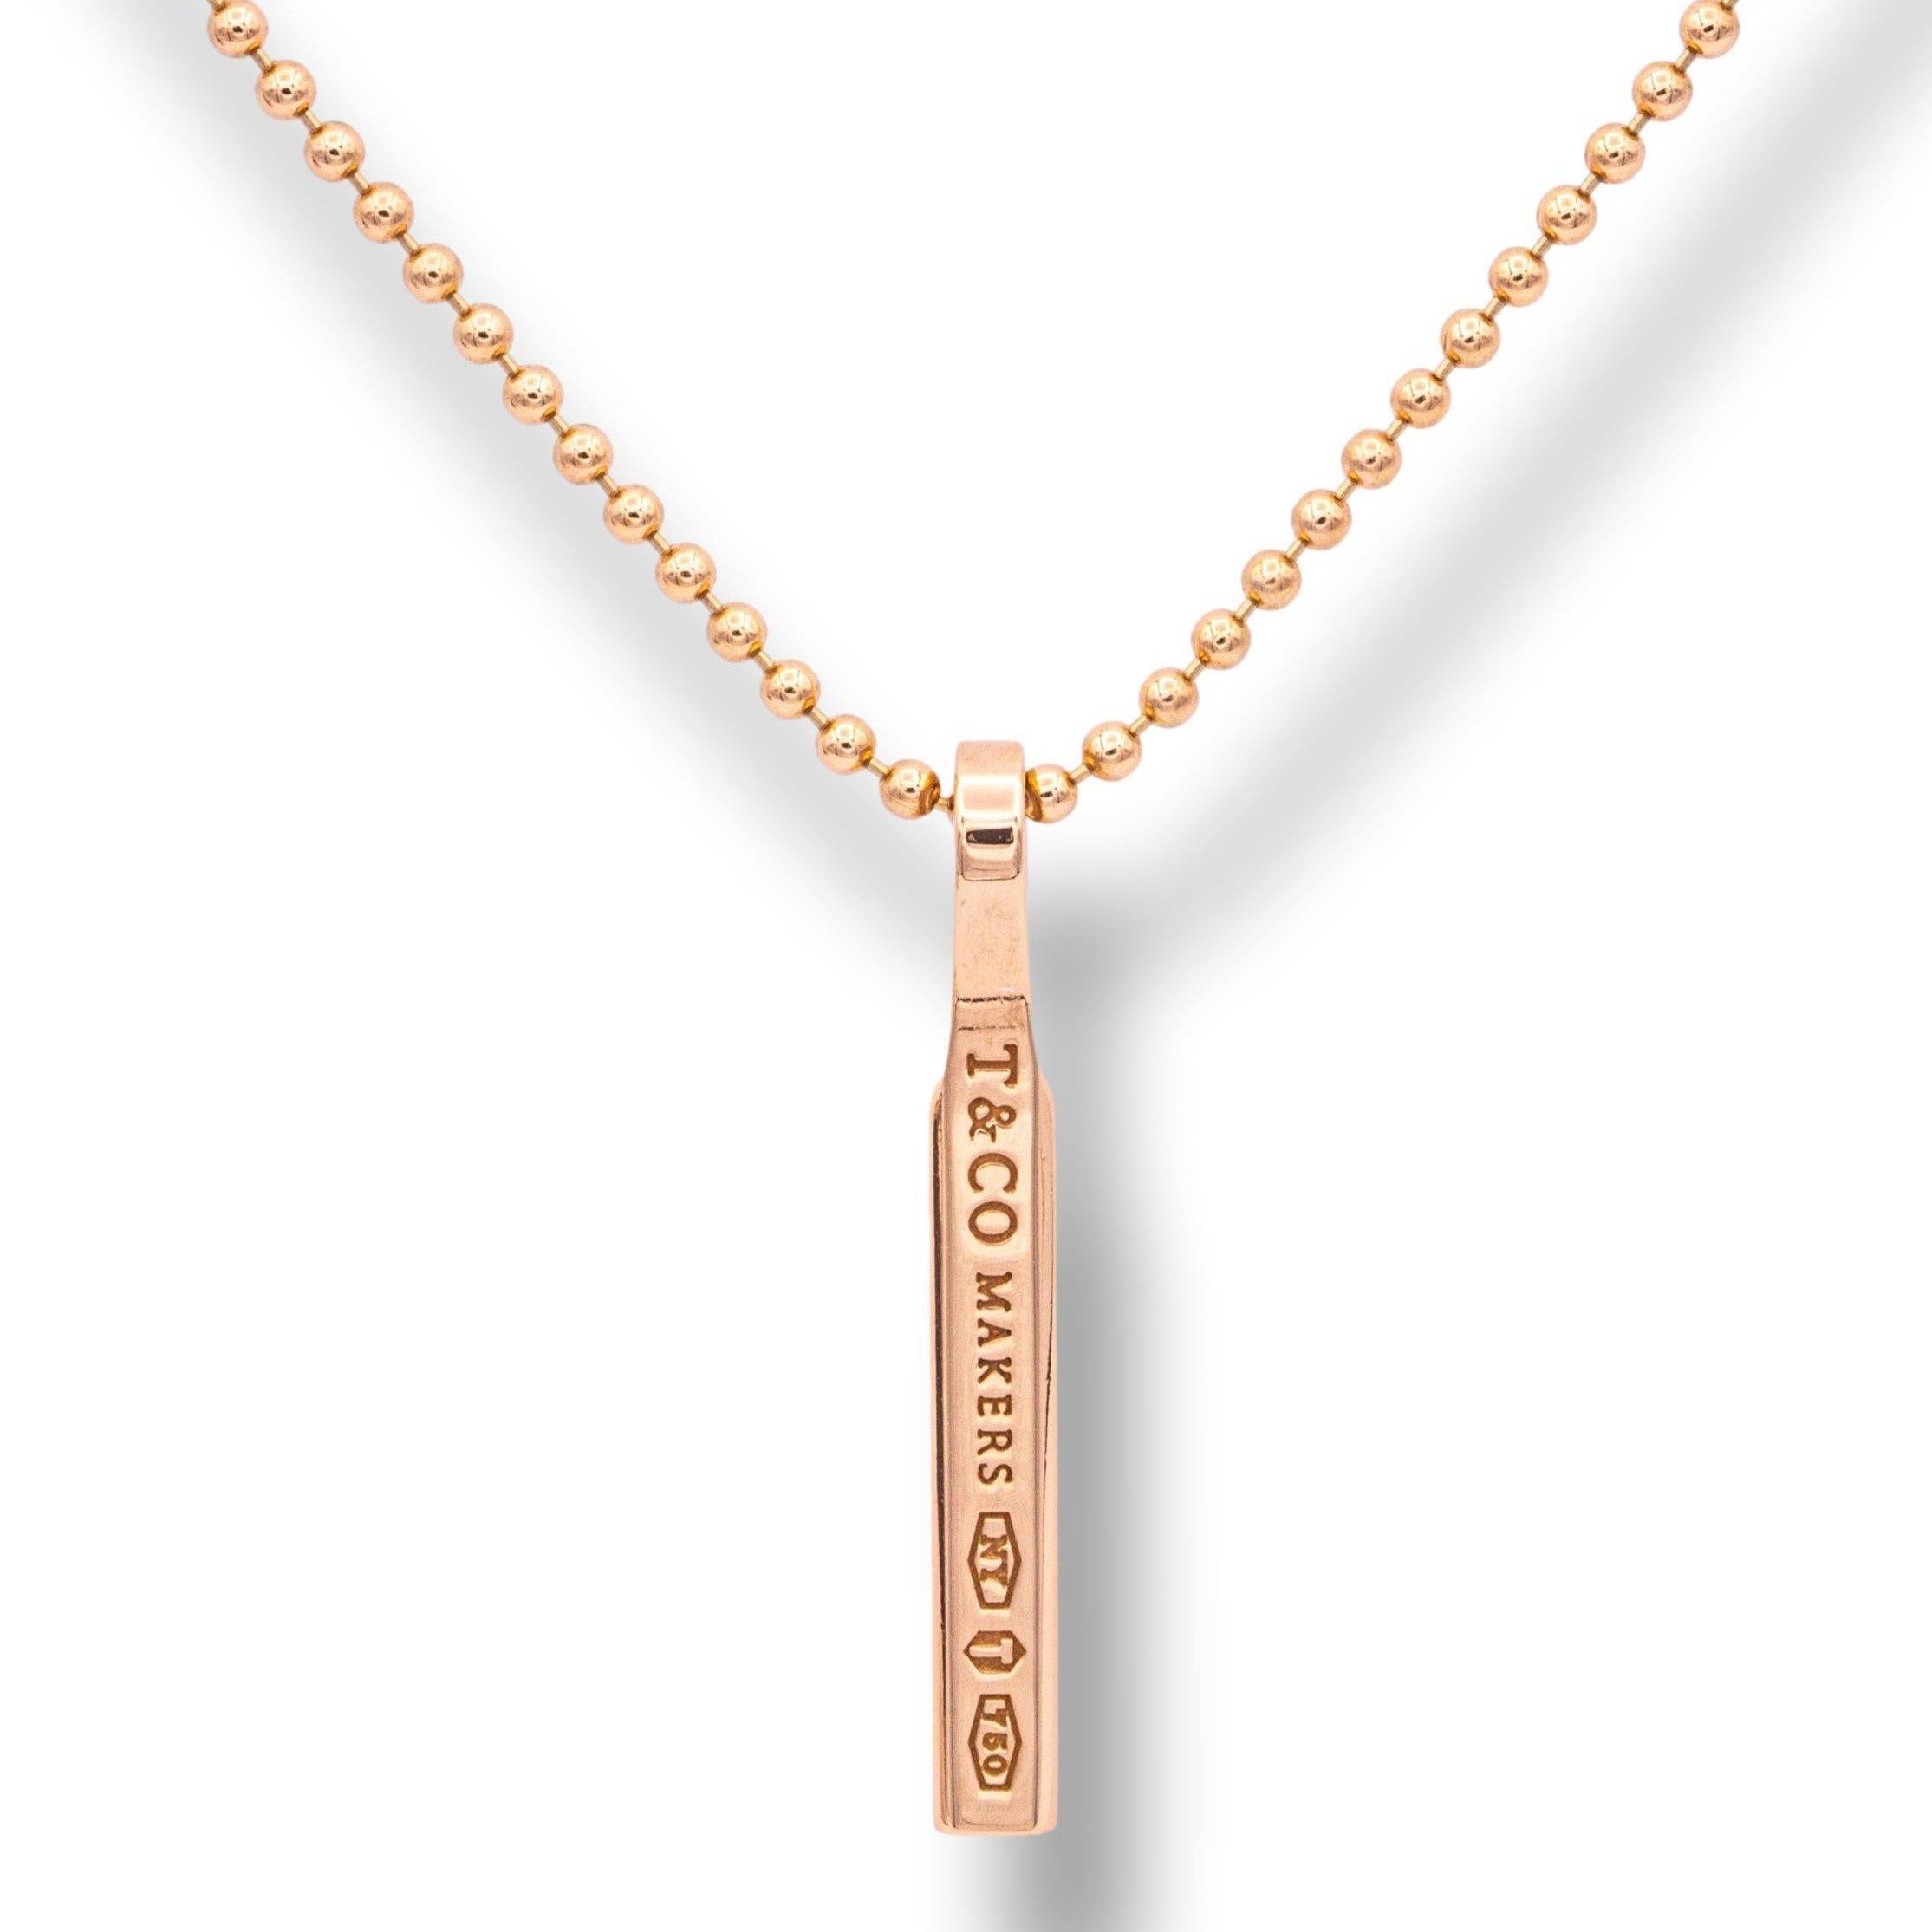 Modern Tiffany & Co. 18K Rose Gold 1837 Makers Bar Pendant Necklace